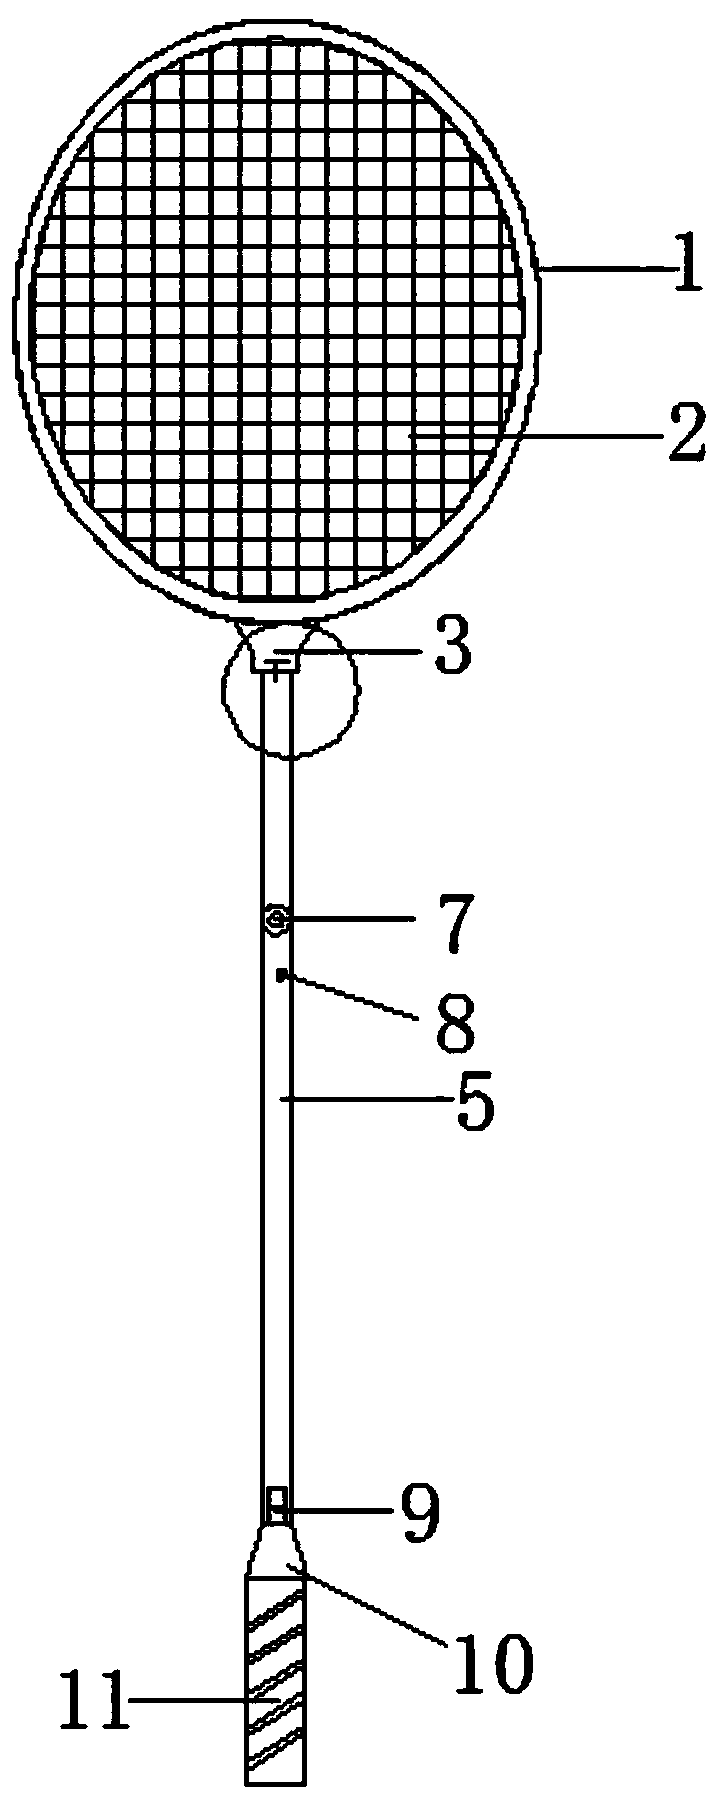 Recreational intelligent badminton racket